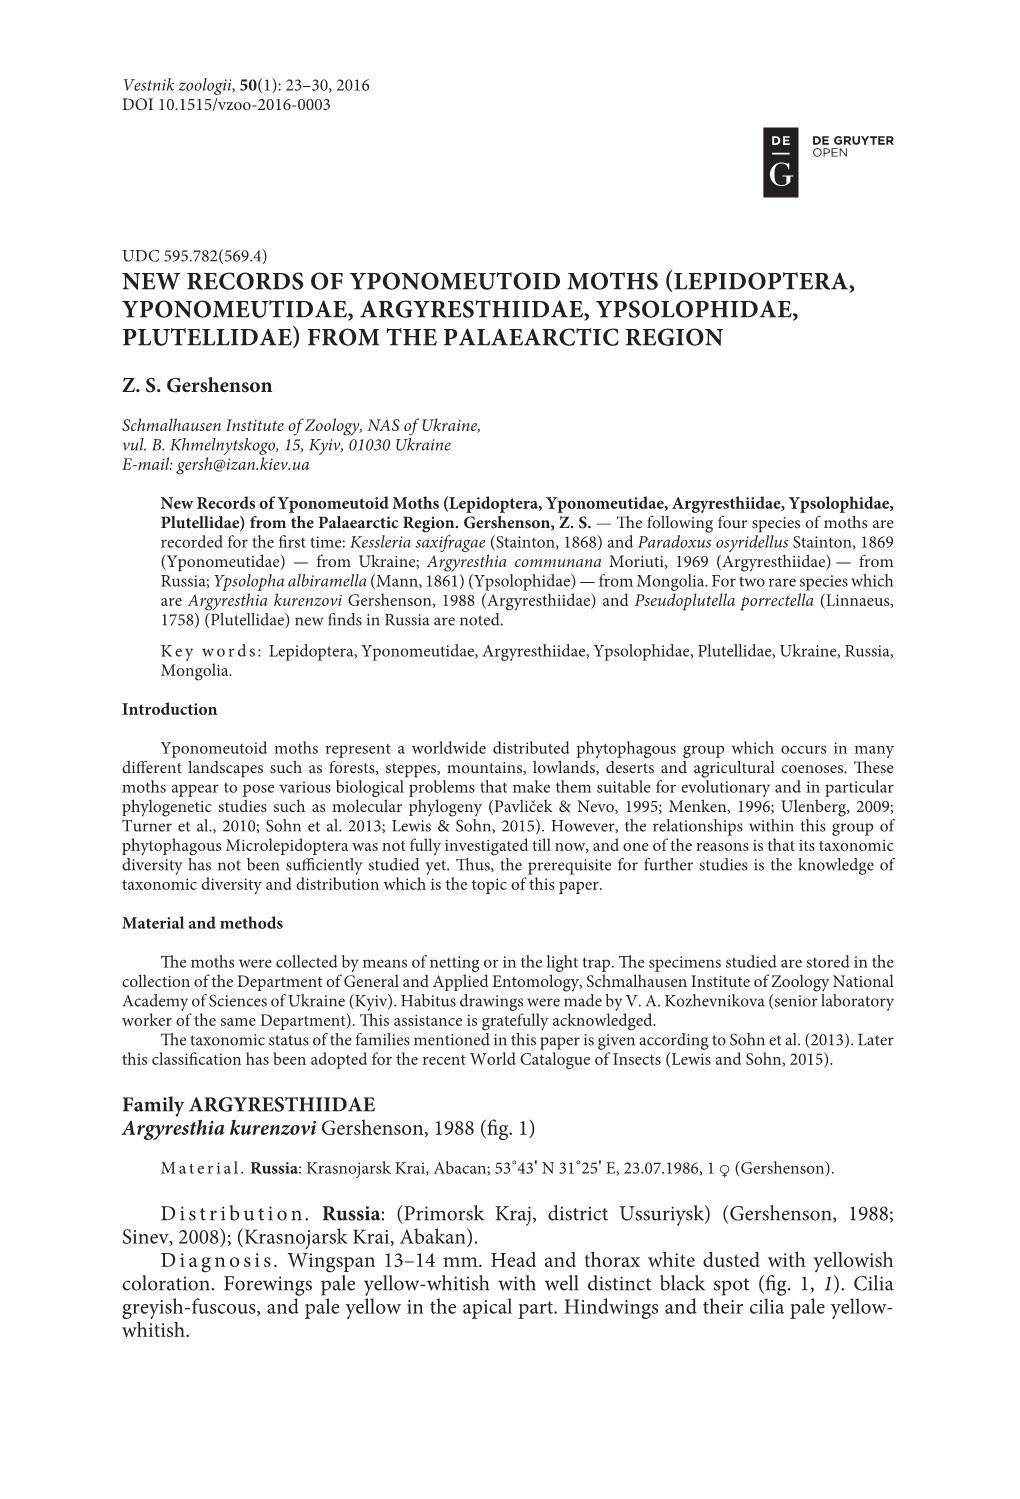 New Records of Yponomeutoid Moths (Lepidoptera, Yponomeutidae, Argyresthiidae, Ypsolophidae, Plutellidae) from the Palaearctic Region